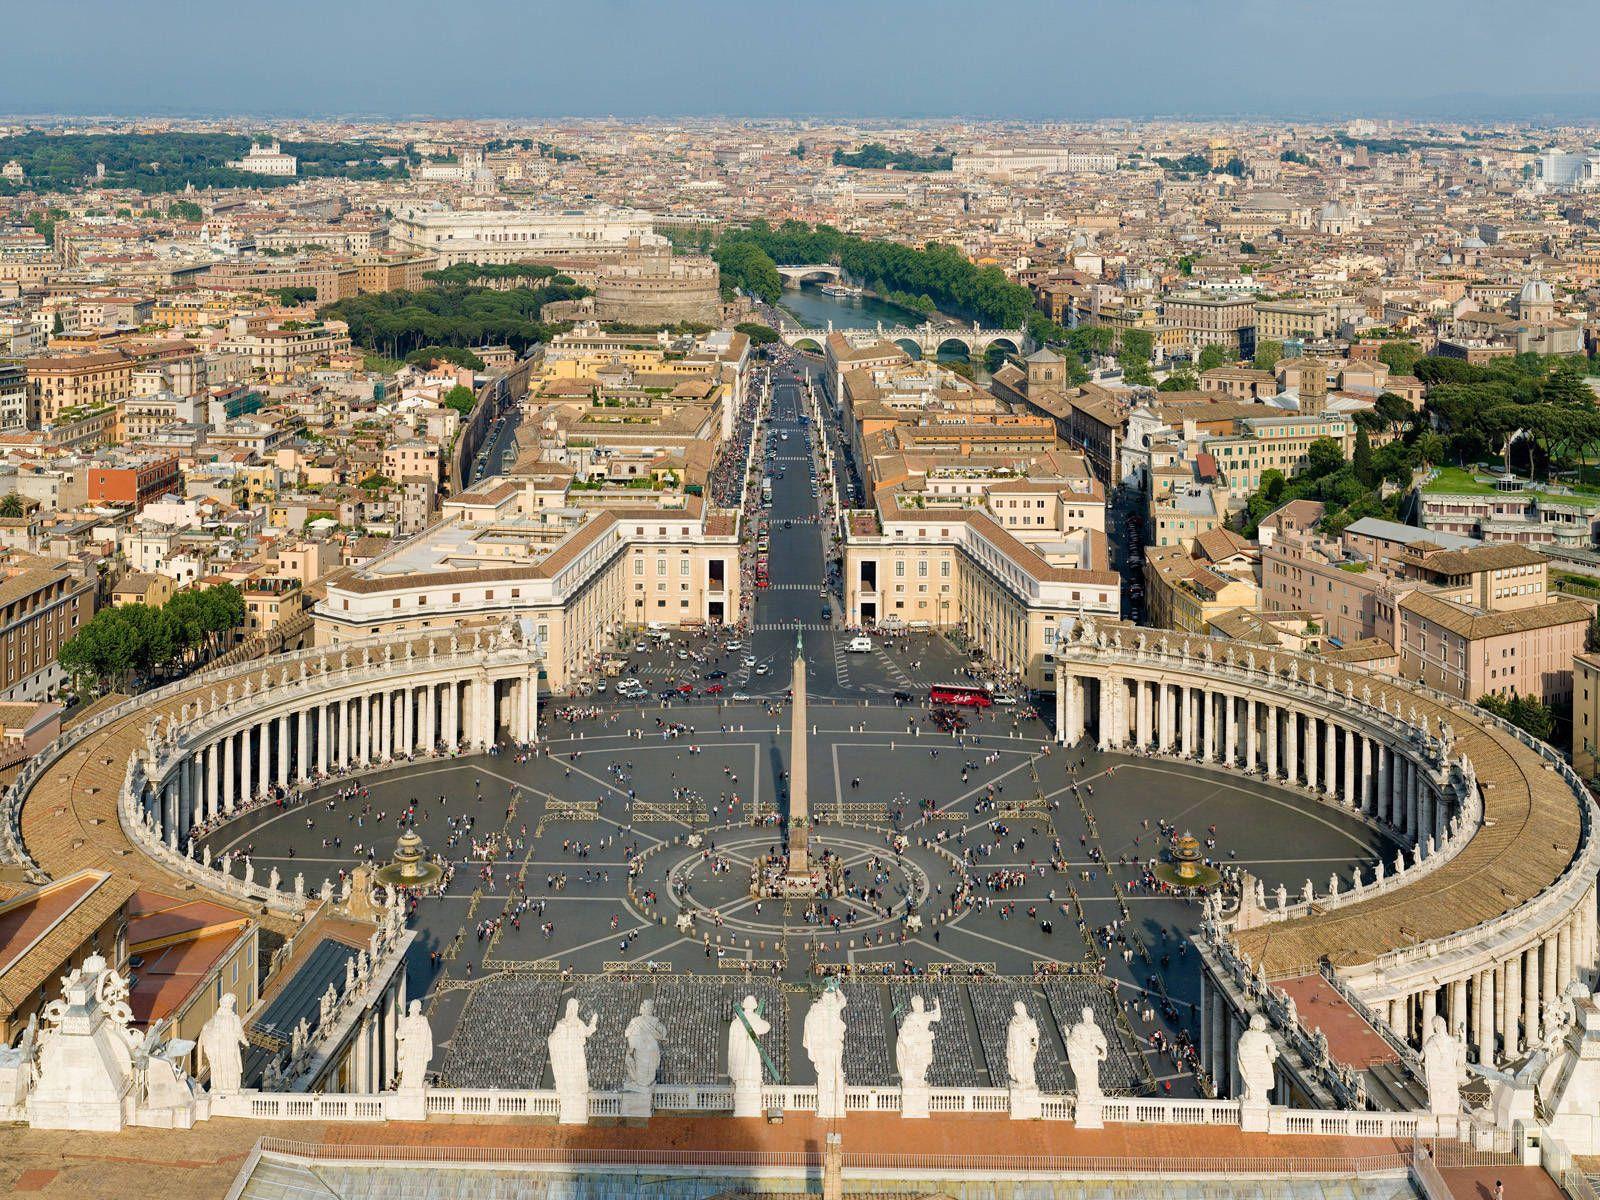 Vatican Cityscape in Rome Italy